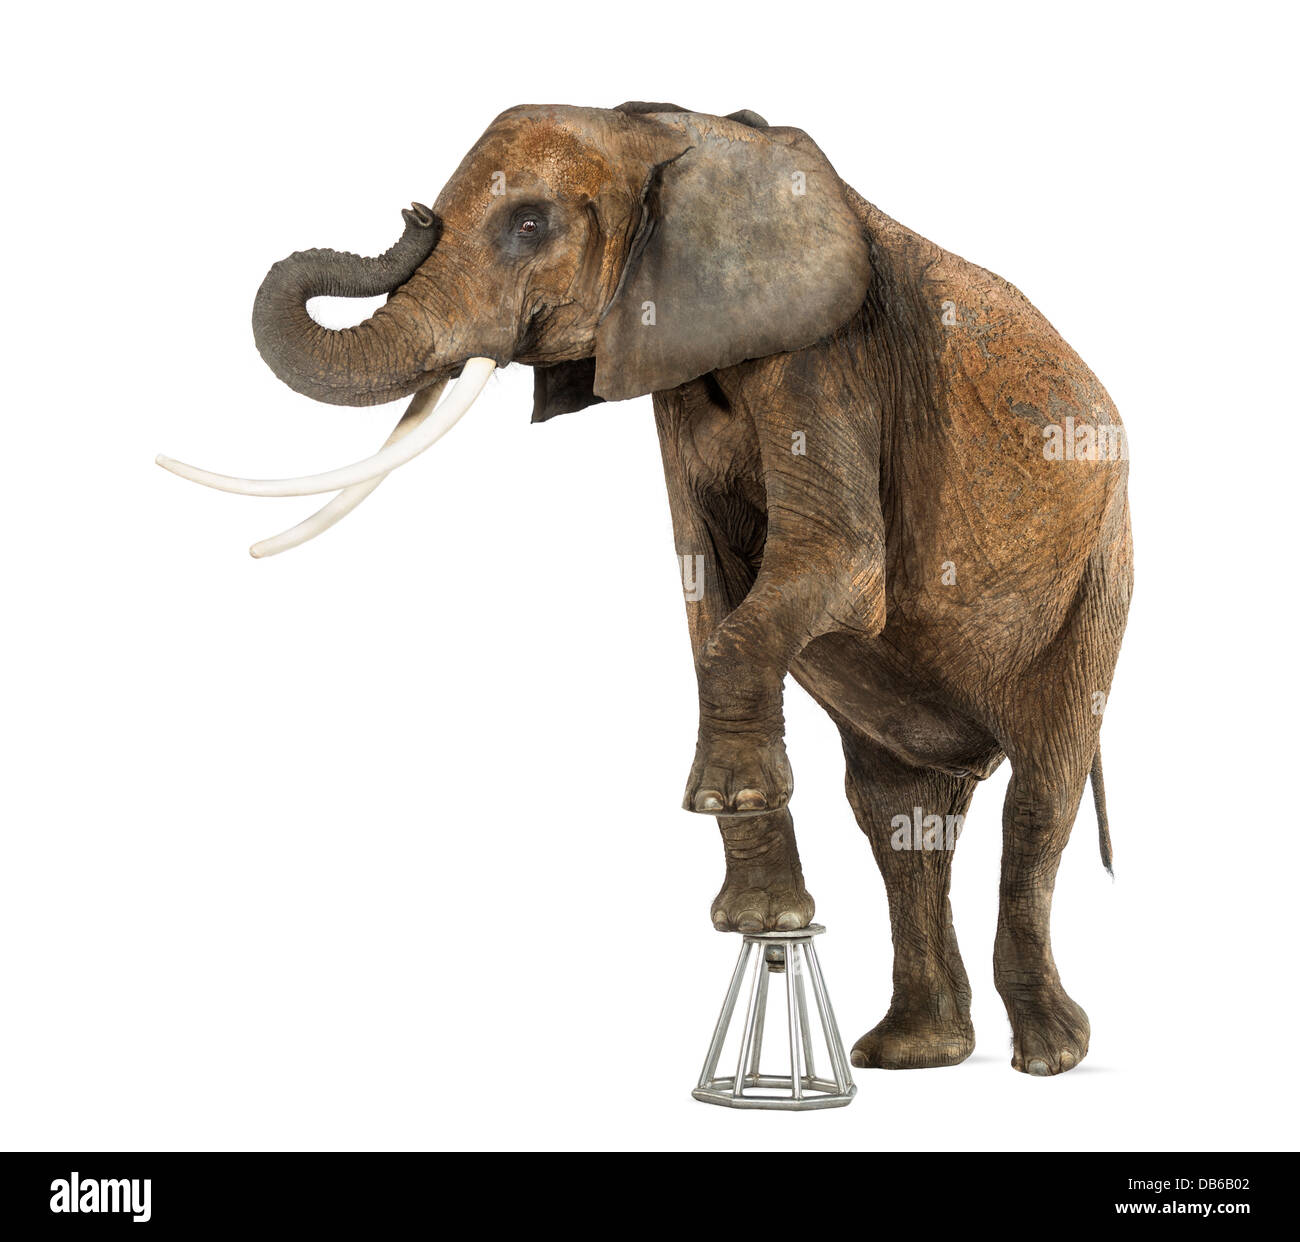 African elephant, Loxodonta africana, performing on stool against white background Stock Photo